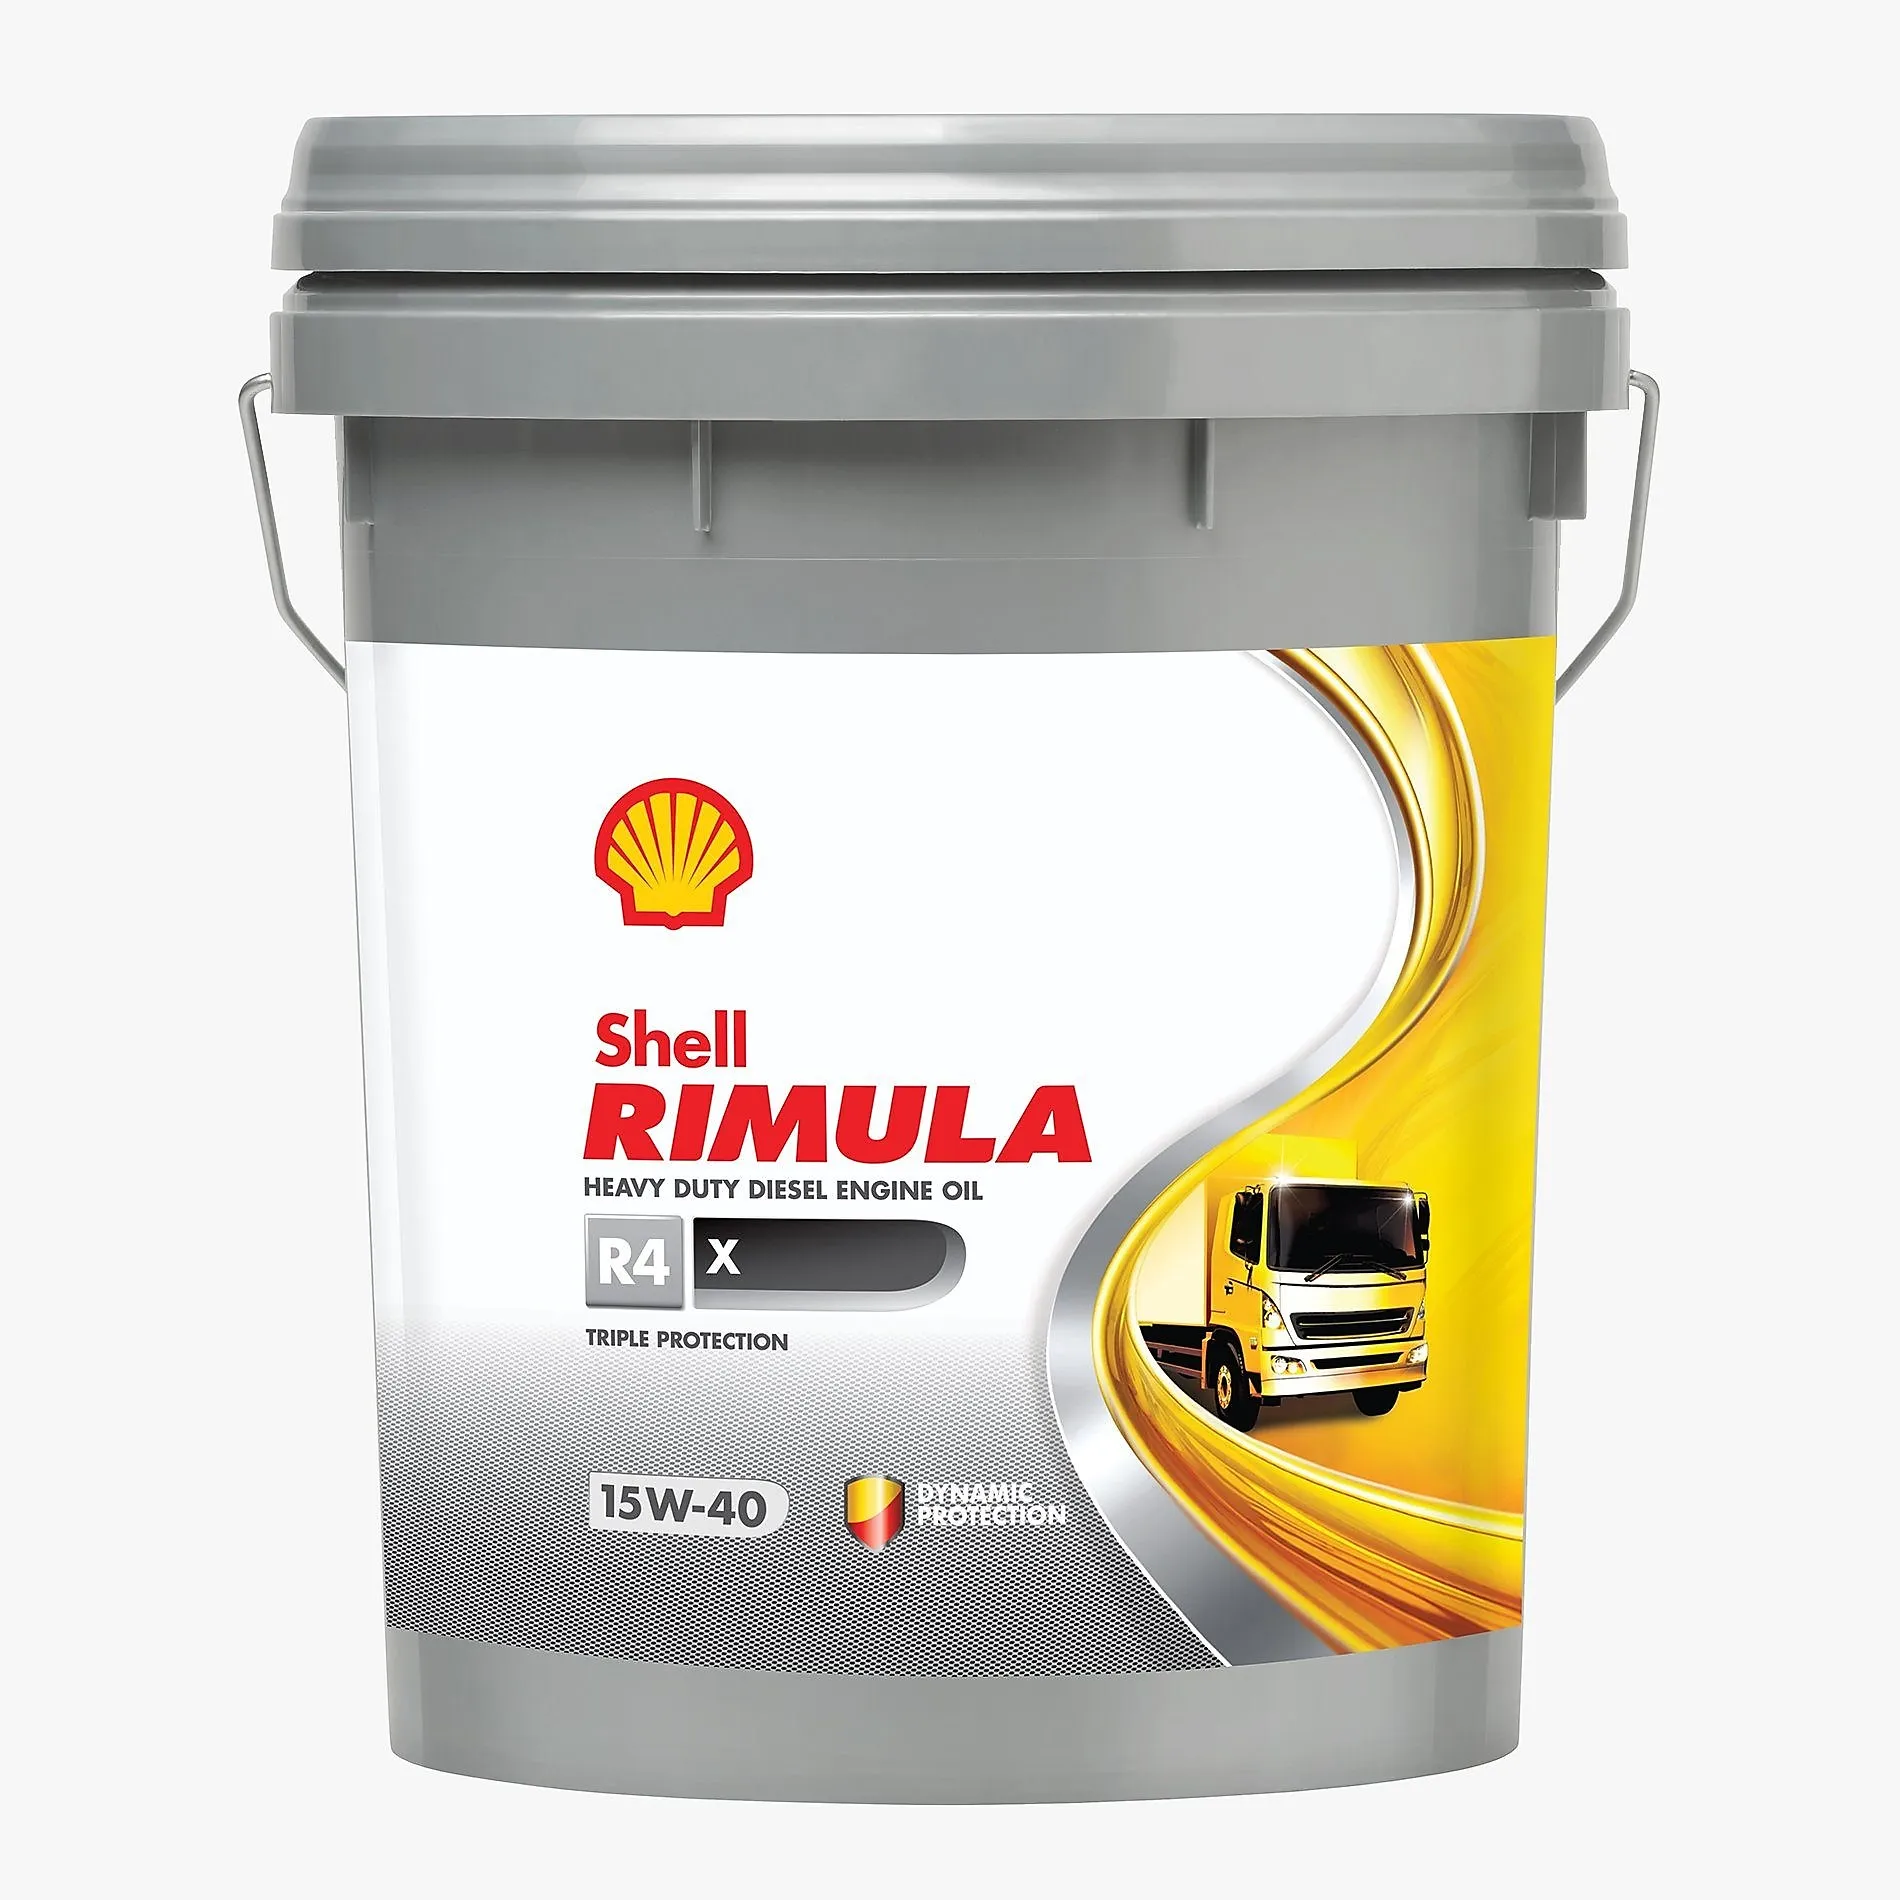 Shell Rimula R4X 15w40#4